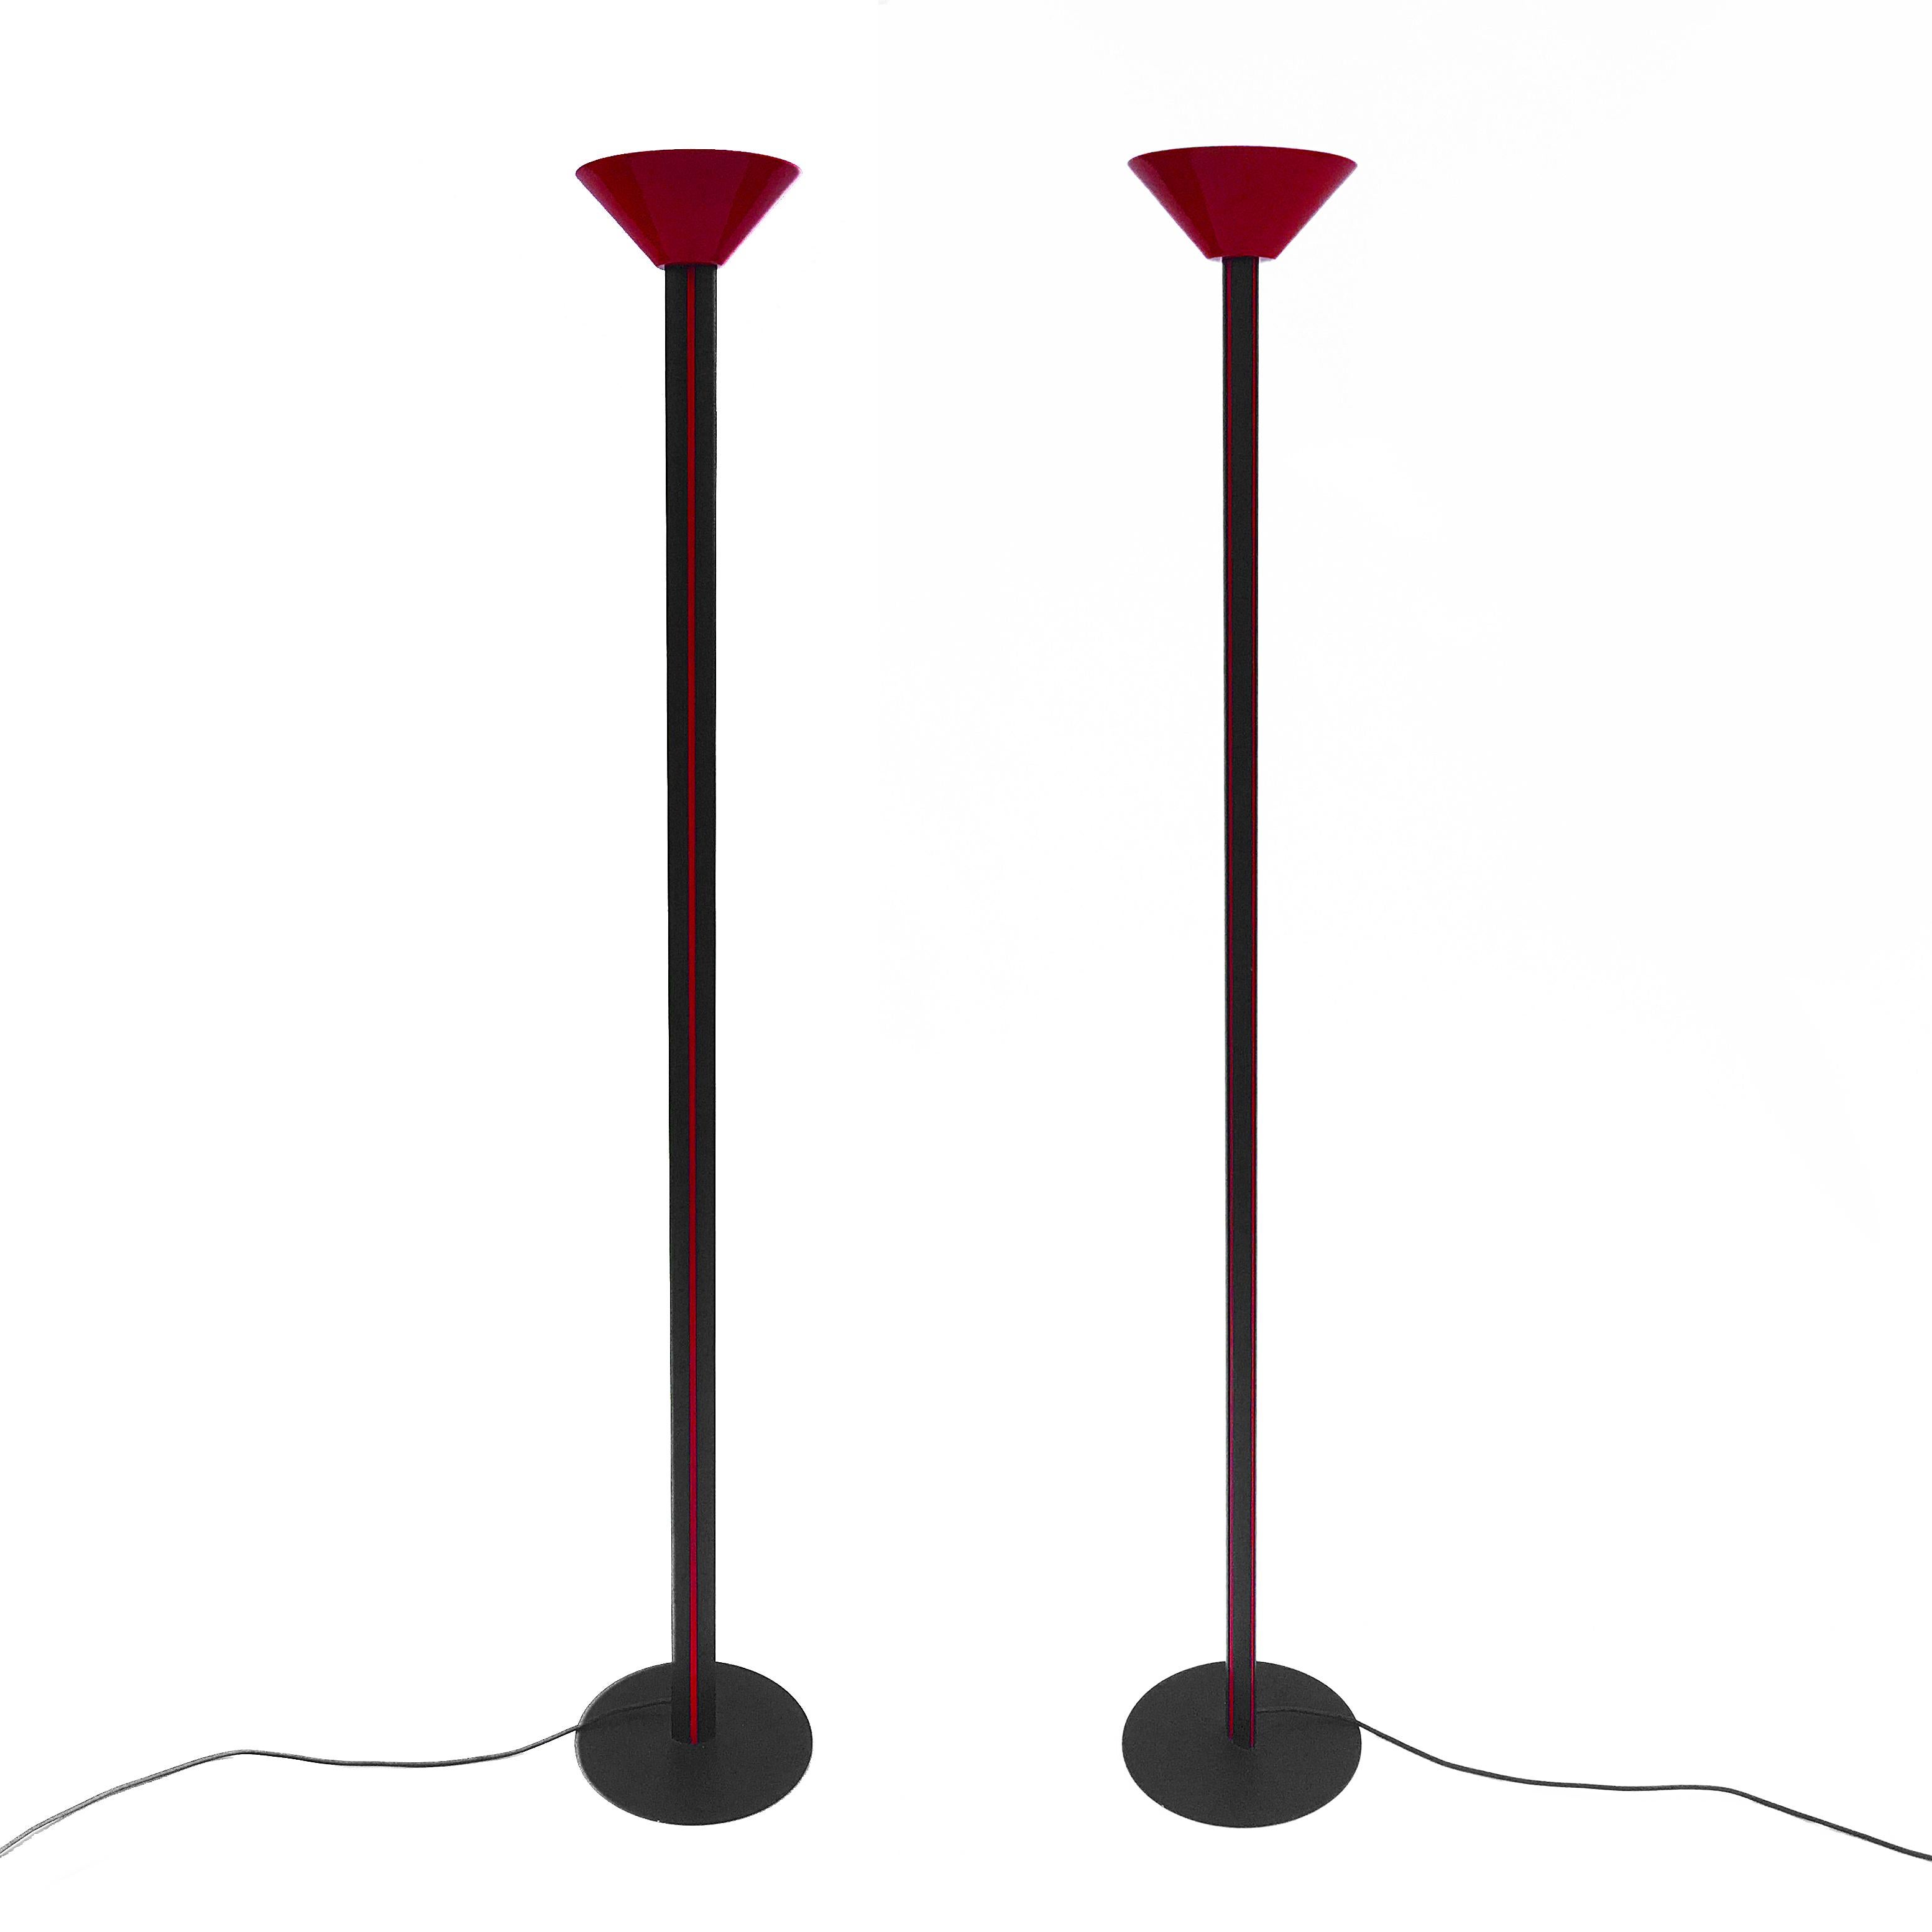 Memphis Inspired Uplighters 1980s Floor Lamp Red Black Postmodern Sottsass Style For Sale 4